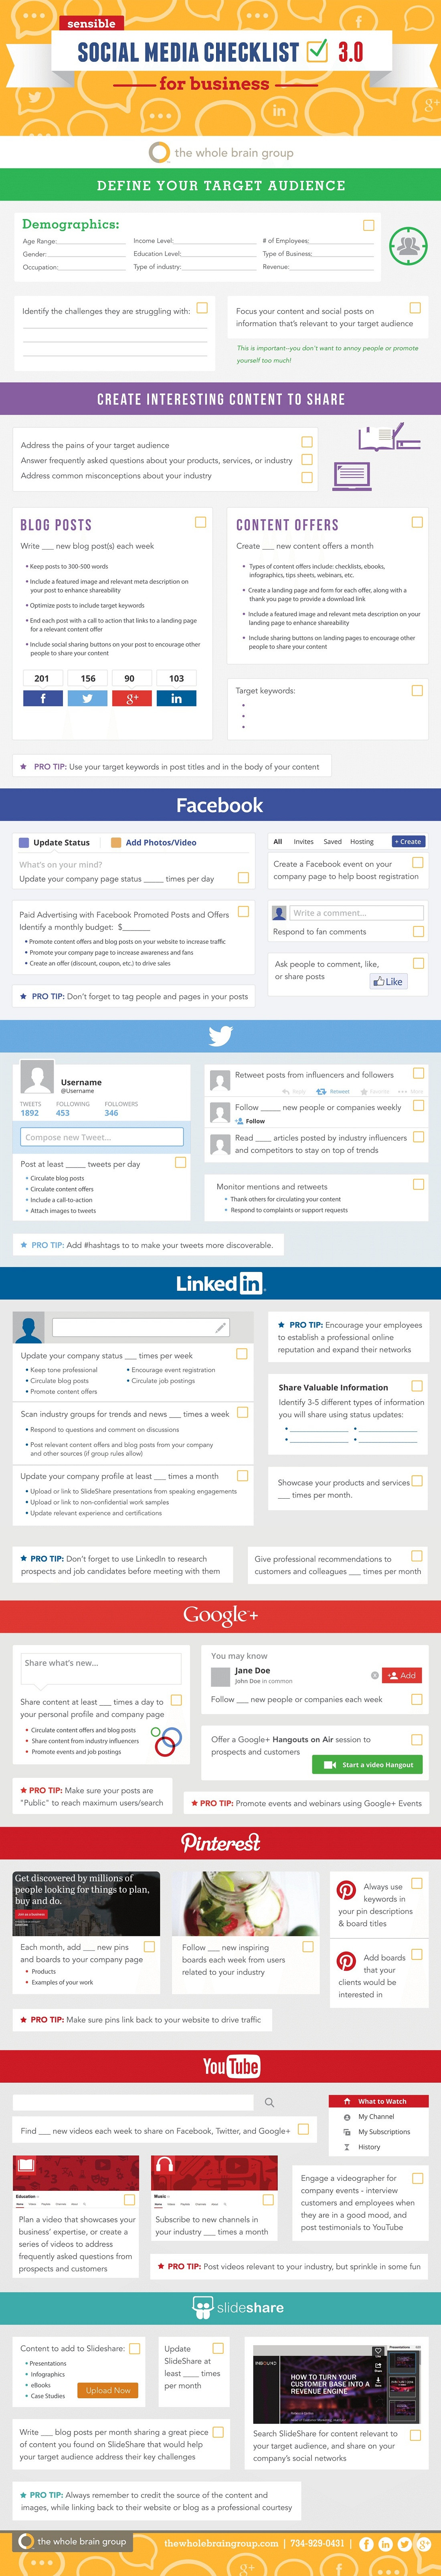 infografia checklist redes sociales negocios